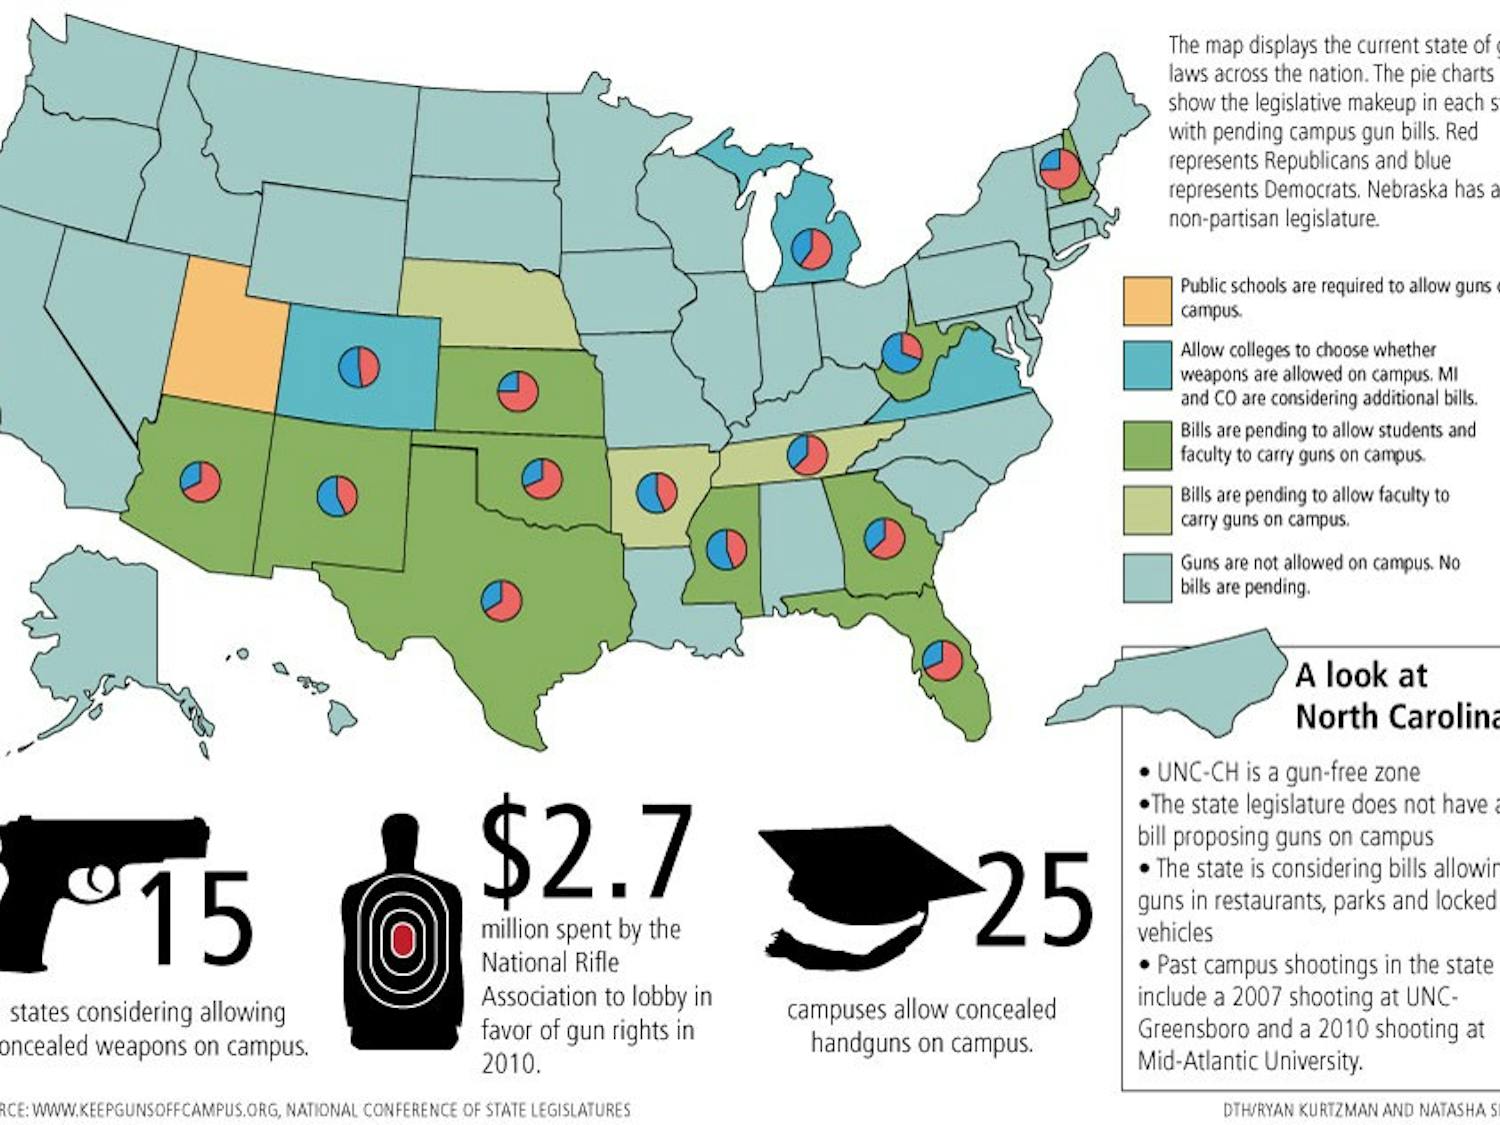 Graphic: Guns on university campuses hot issue for legislators nationwide (Ryan Kurtzman and Natasha Smith)